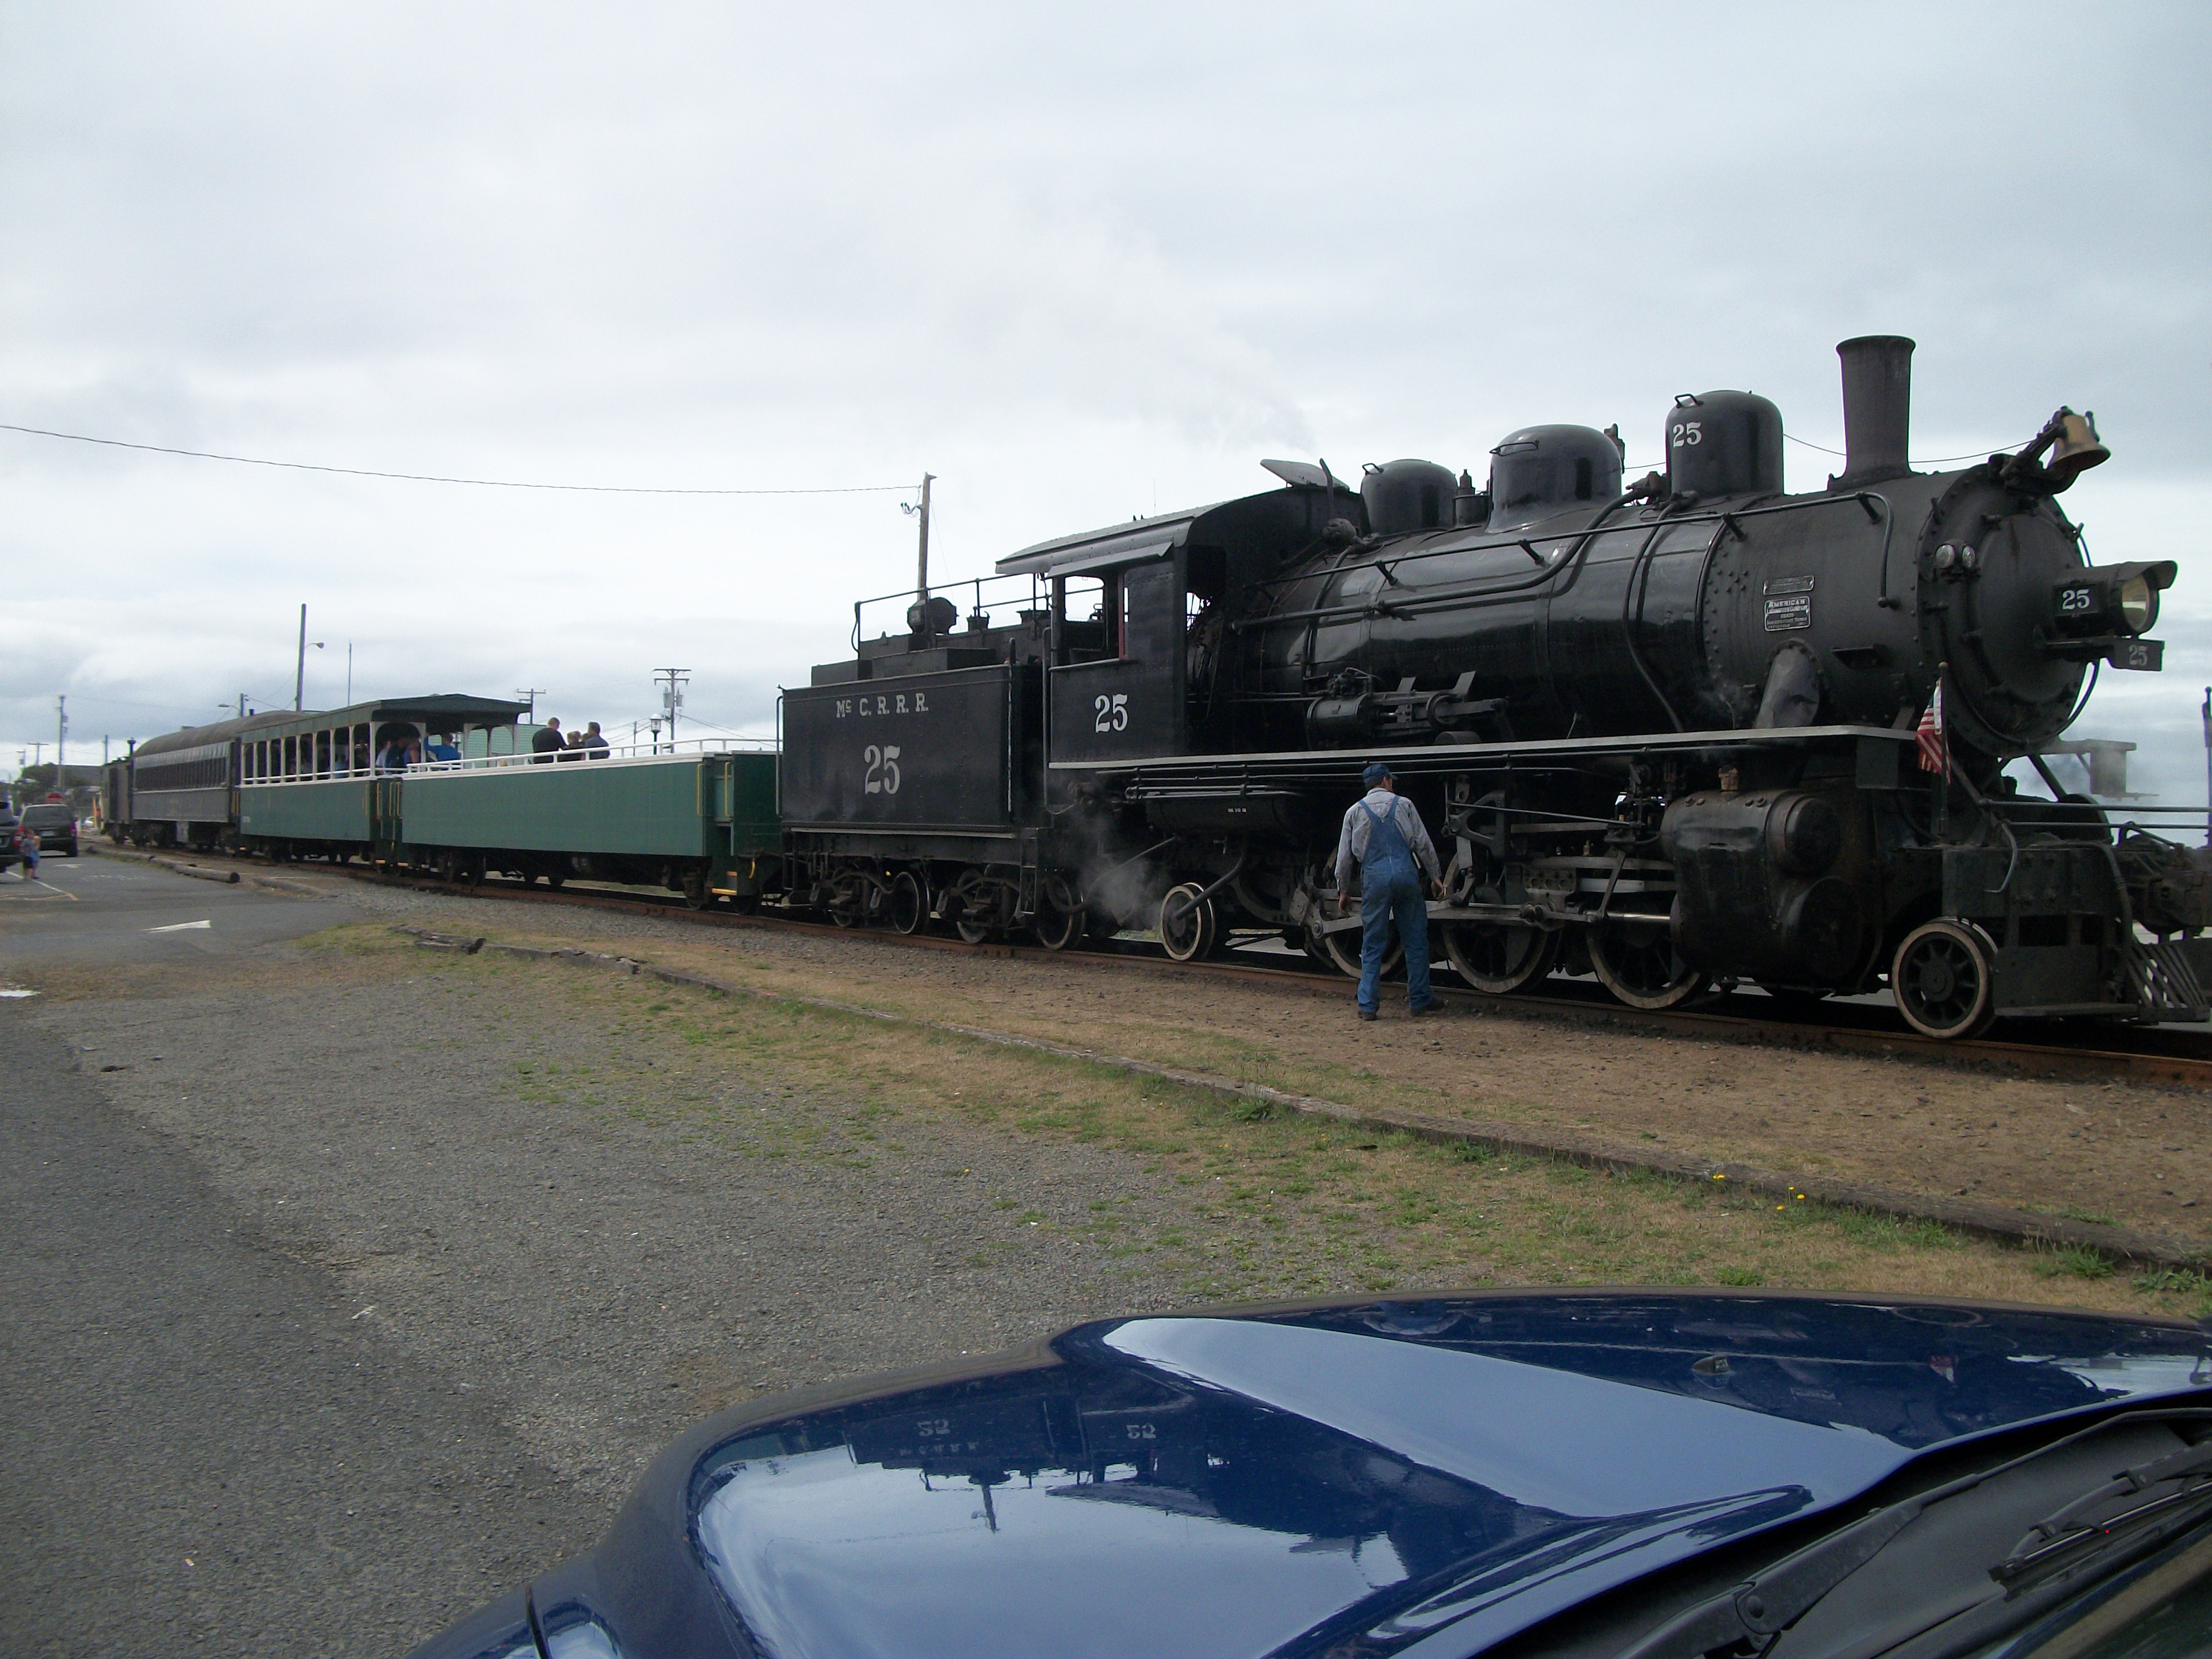 Rockaway Beach Steam Engine, runs June to September